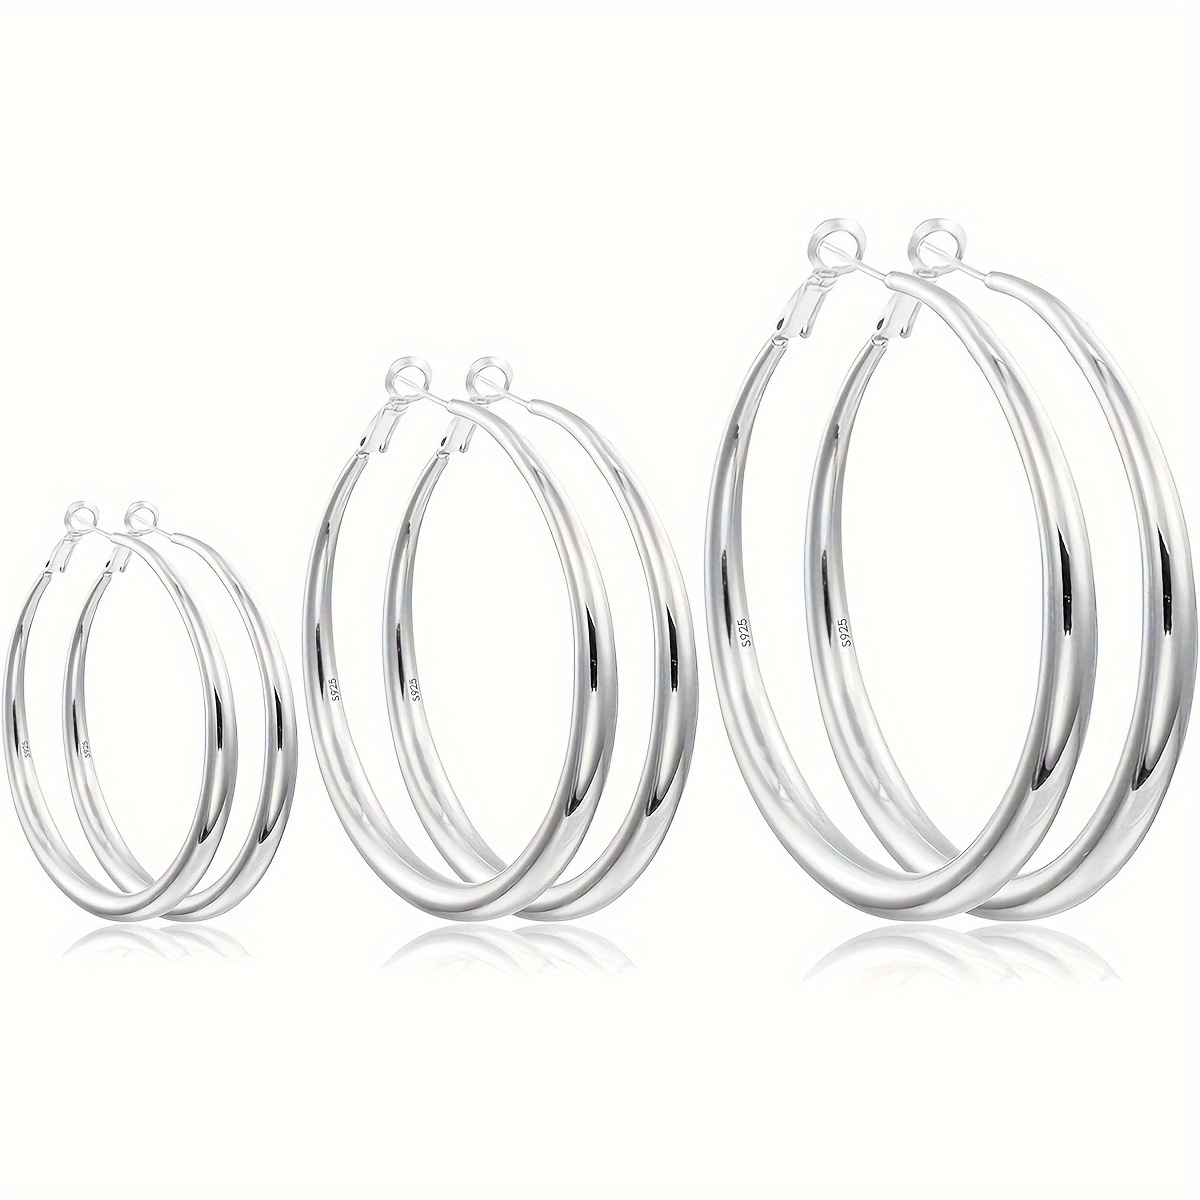 

3 Pairs Of Gold Silver Large Hoop Earrings For Women 925 Sterling Silver Hoop Earrings Hypoallergenic Lightweight Plated Large Round Hoop Earrings For Women 30/40/50 Mm